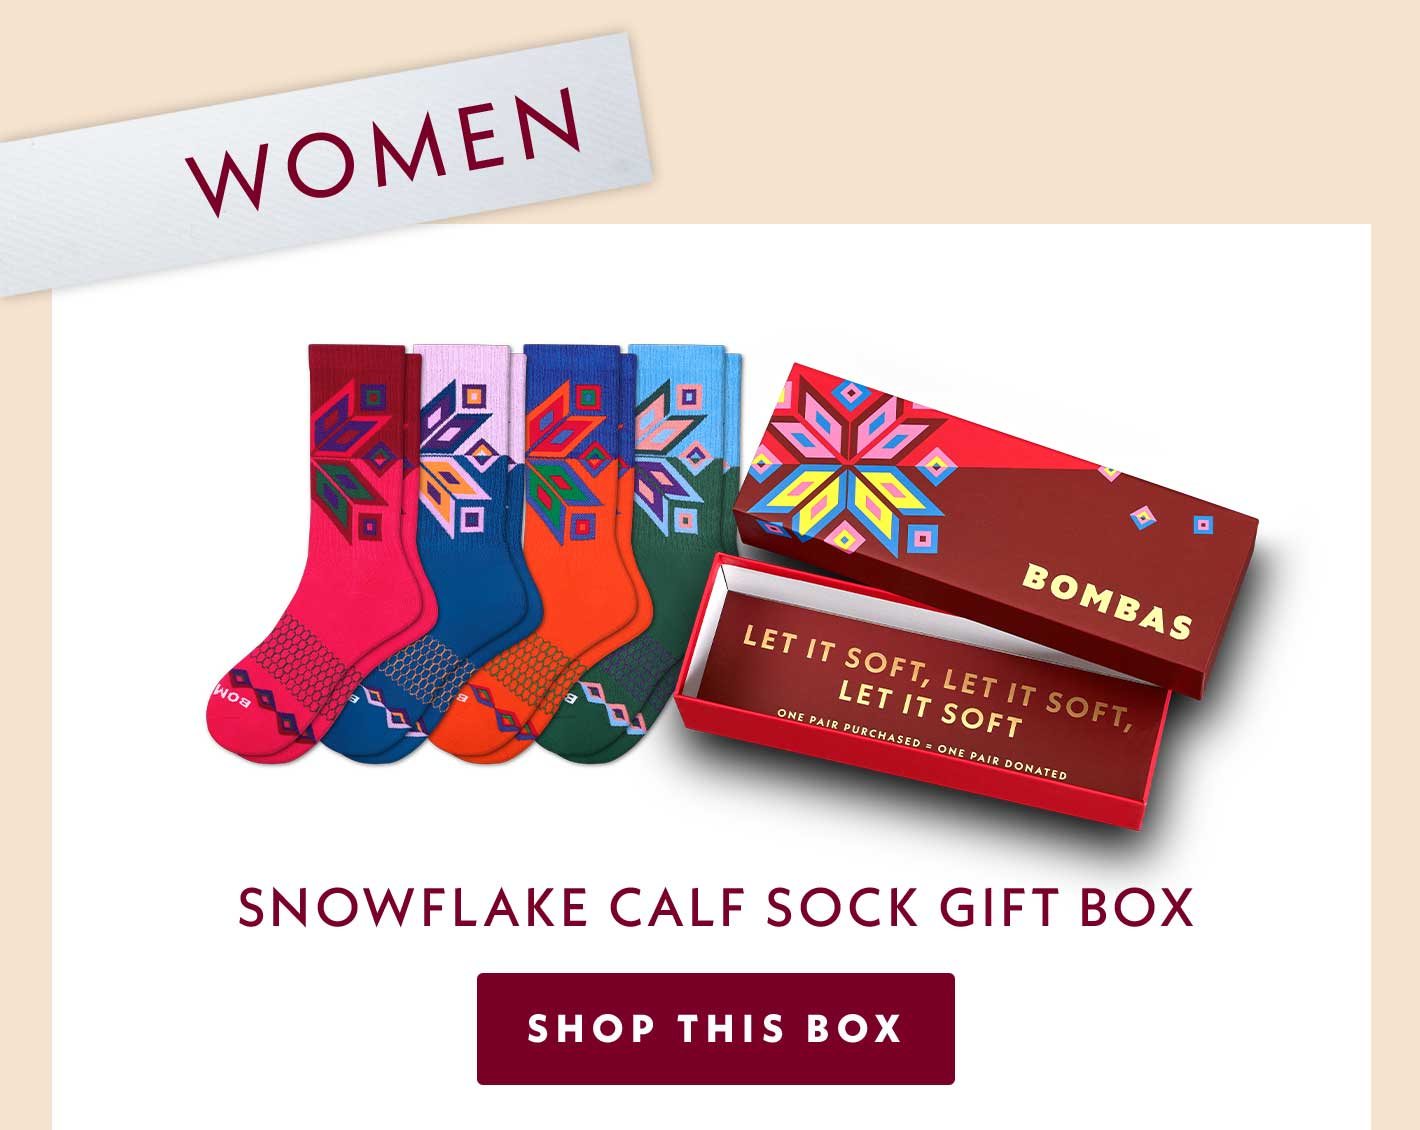 Snowflake Calf Sock Gift Box